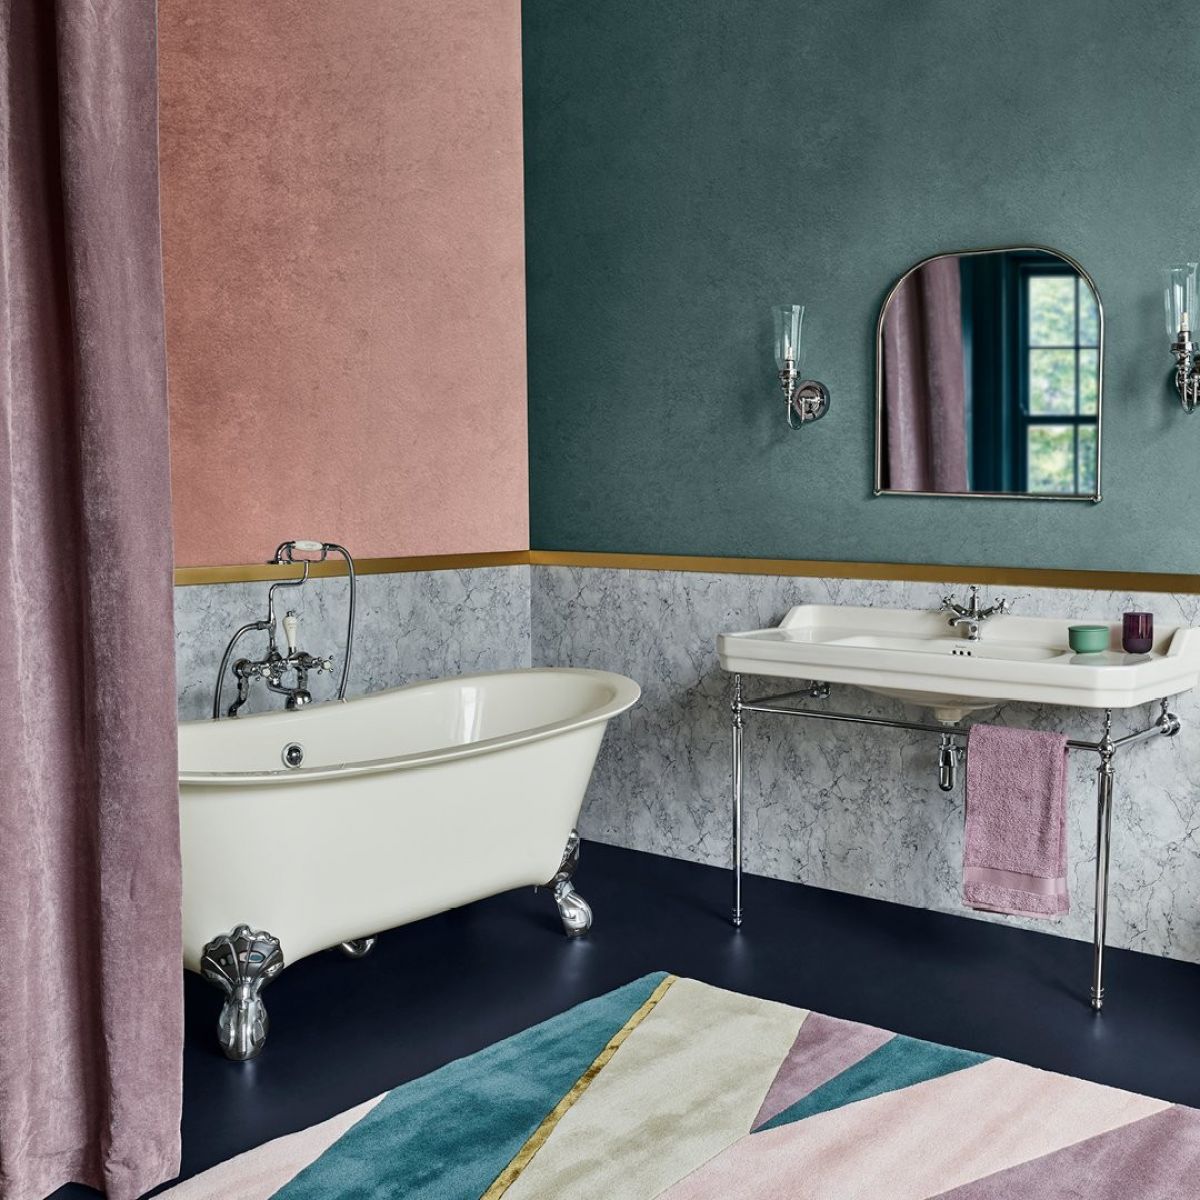 How to create a ‘happy’ bathroom full of joy, energy and impact! @UK_Bathrooms